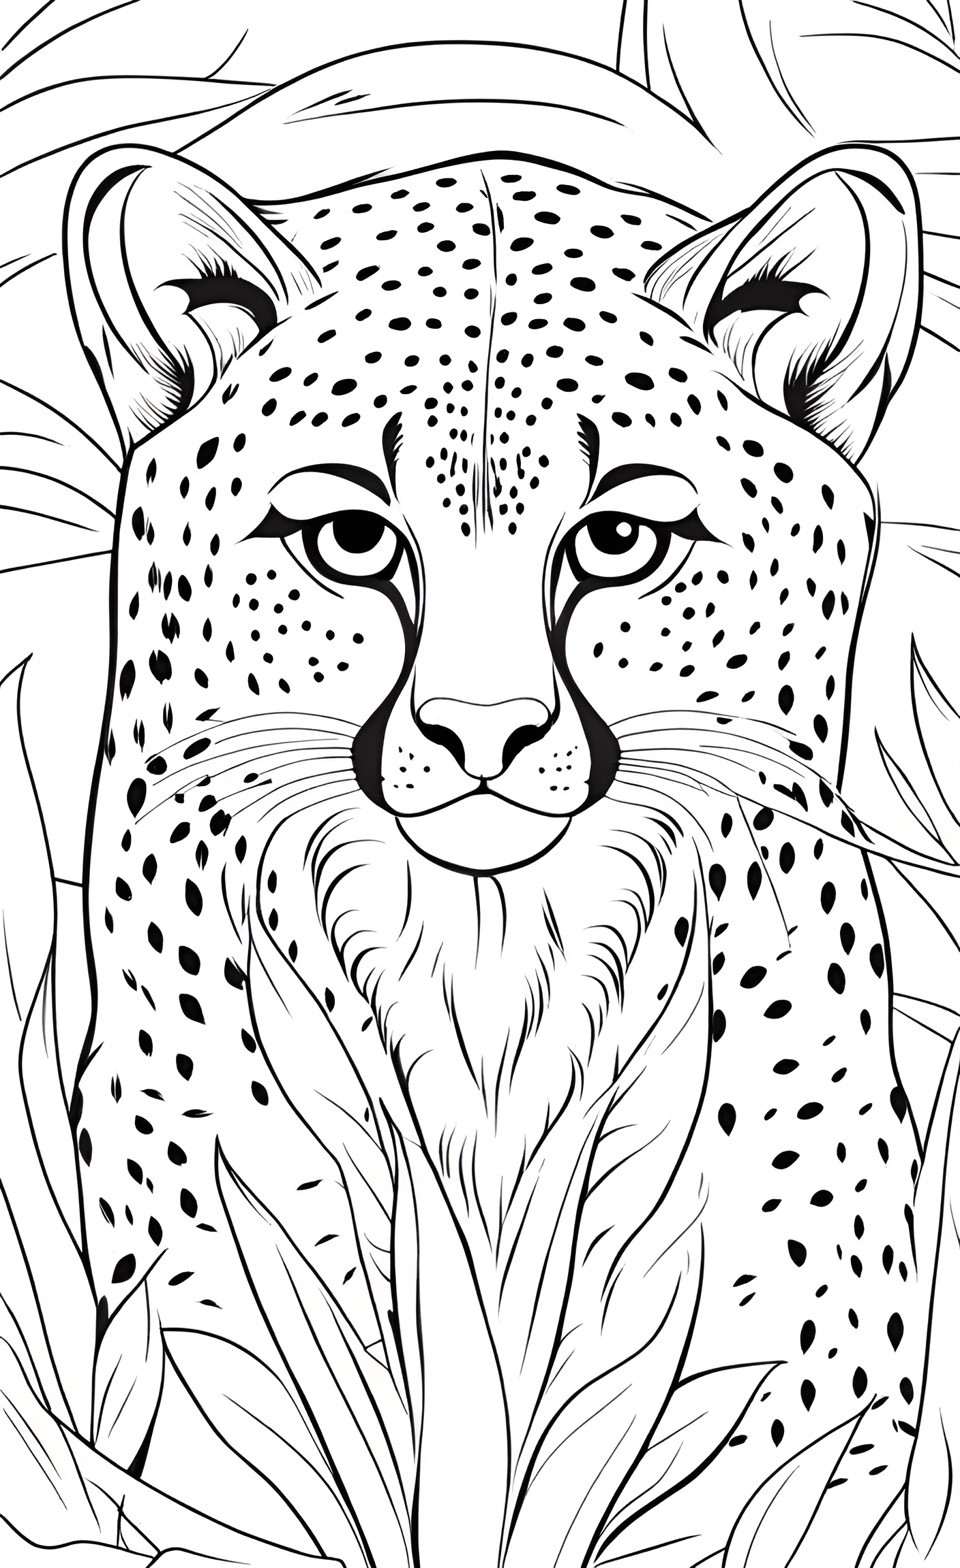 En İyi Çita Boyama Sayfaları | Best Cheetah Coloring Pages For